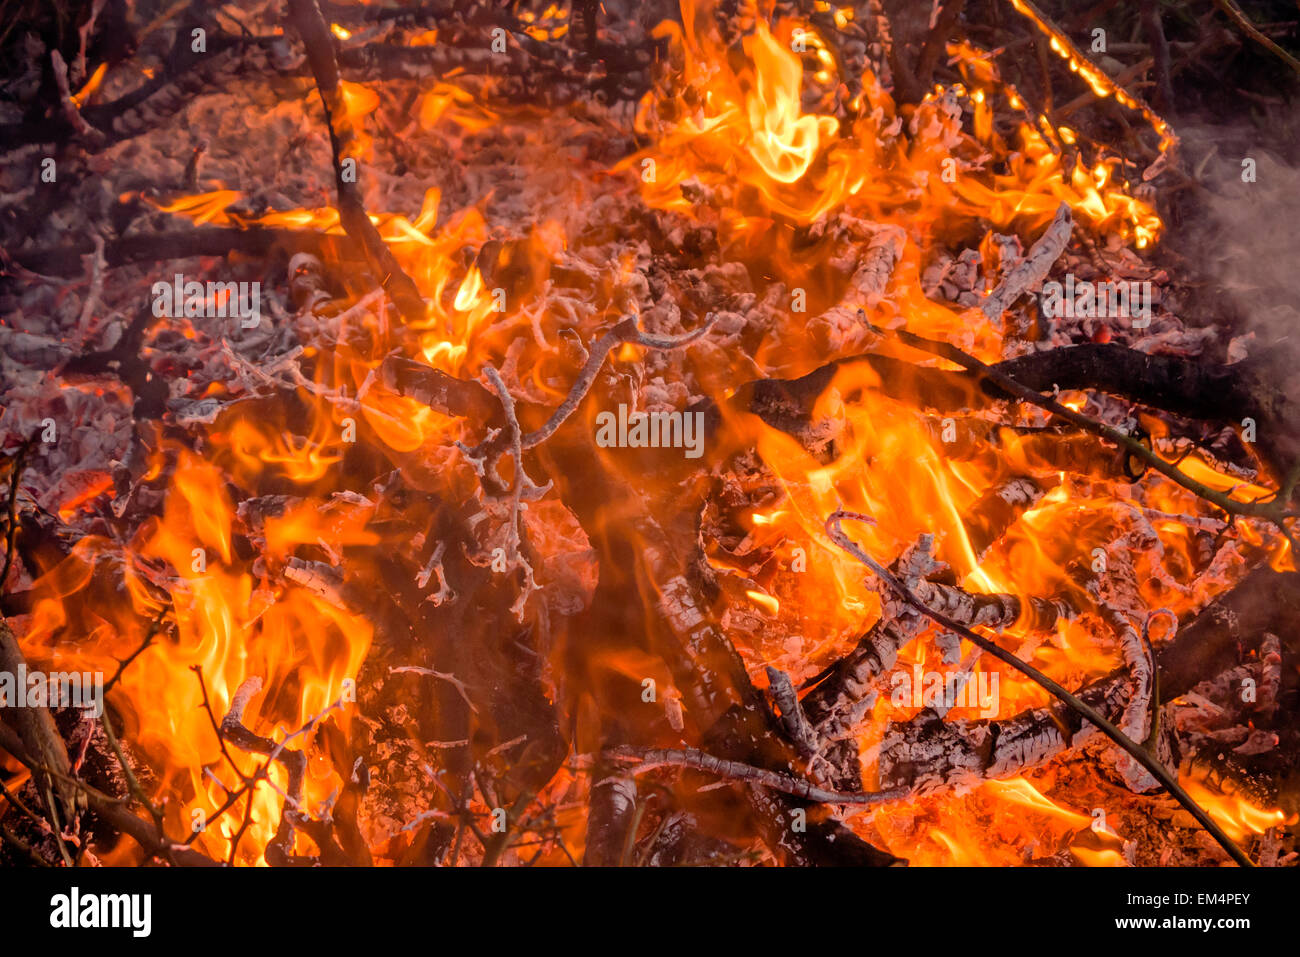 https://c8.alamy.com/comp/EM4PEY/bonfire-burning-rubbish-in-garden-EM4PEY.jpg